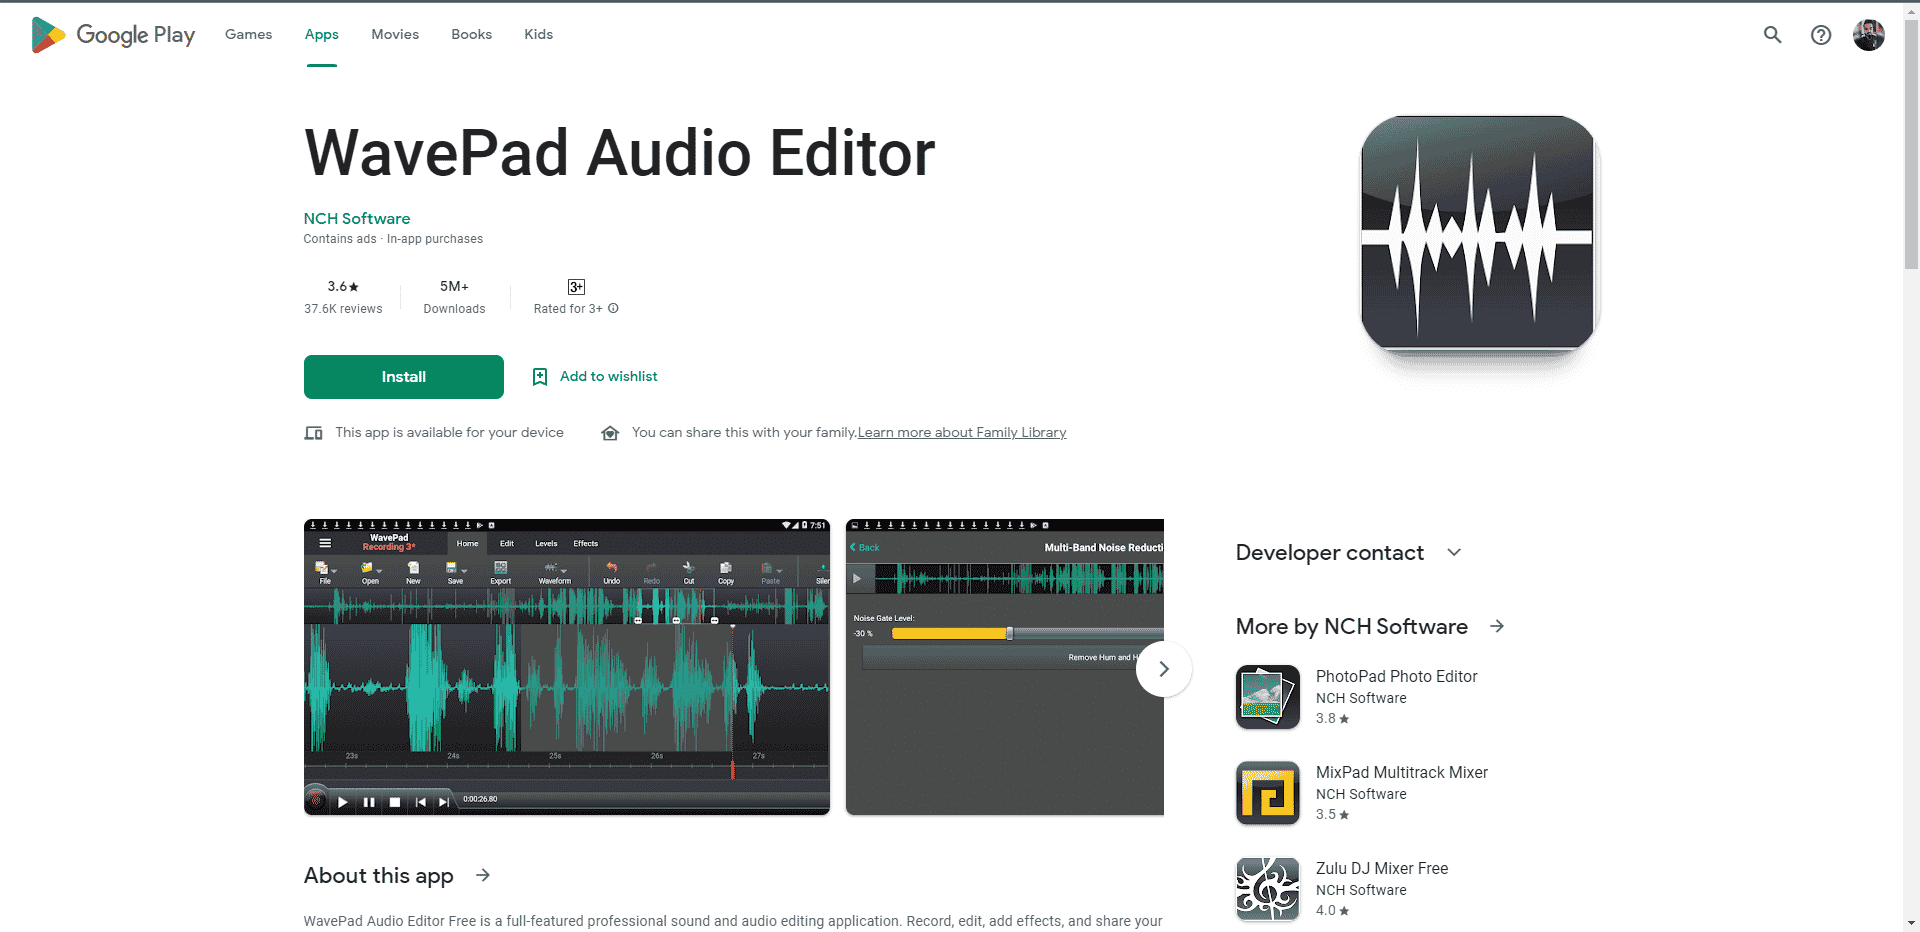 WavePad Audio Editor Play Store webpage